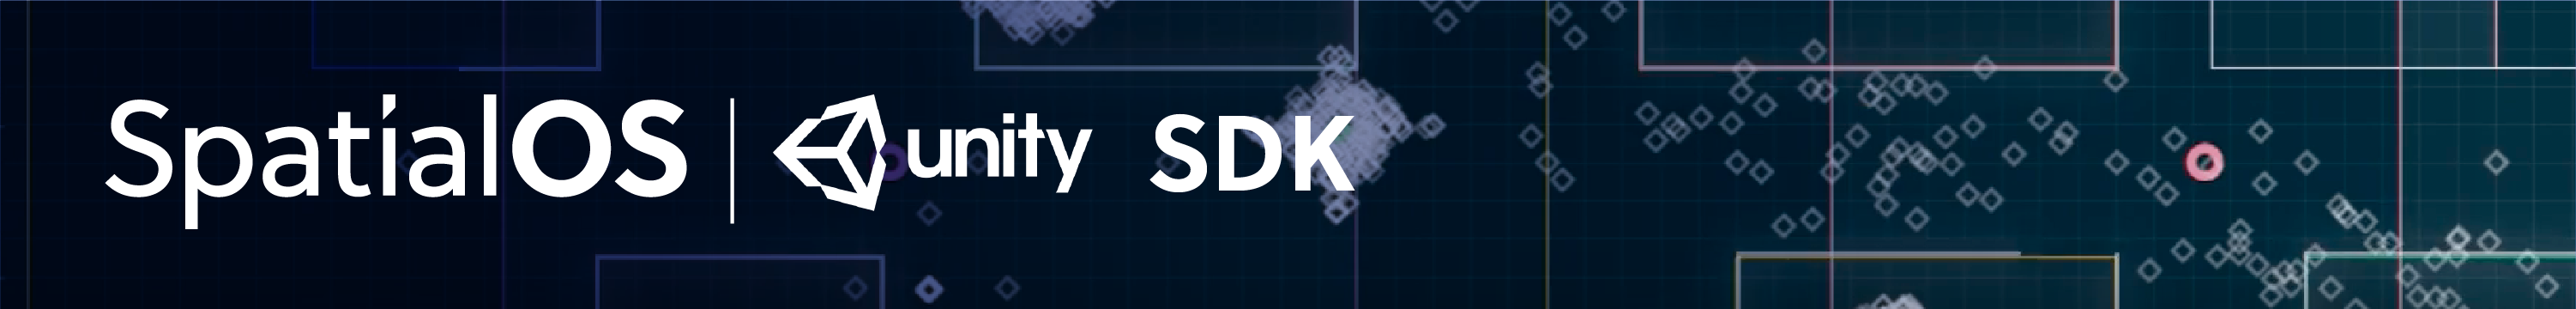 SpatialOS Unity SDK documentation